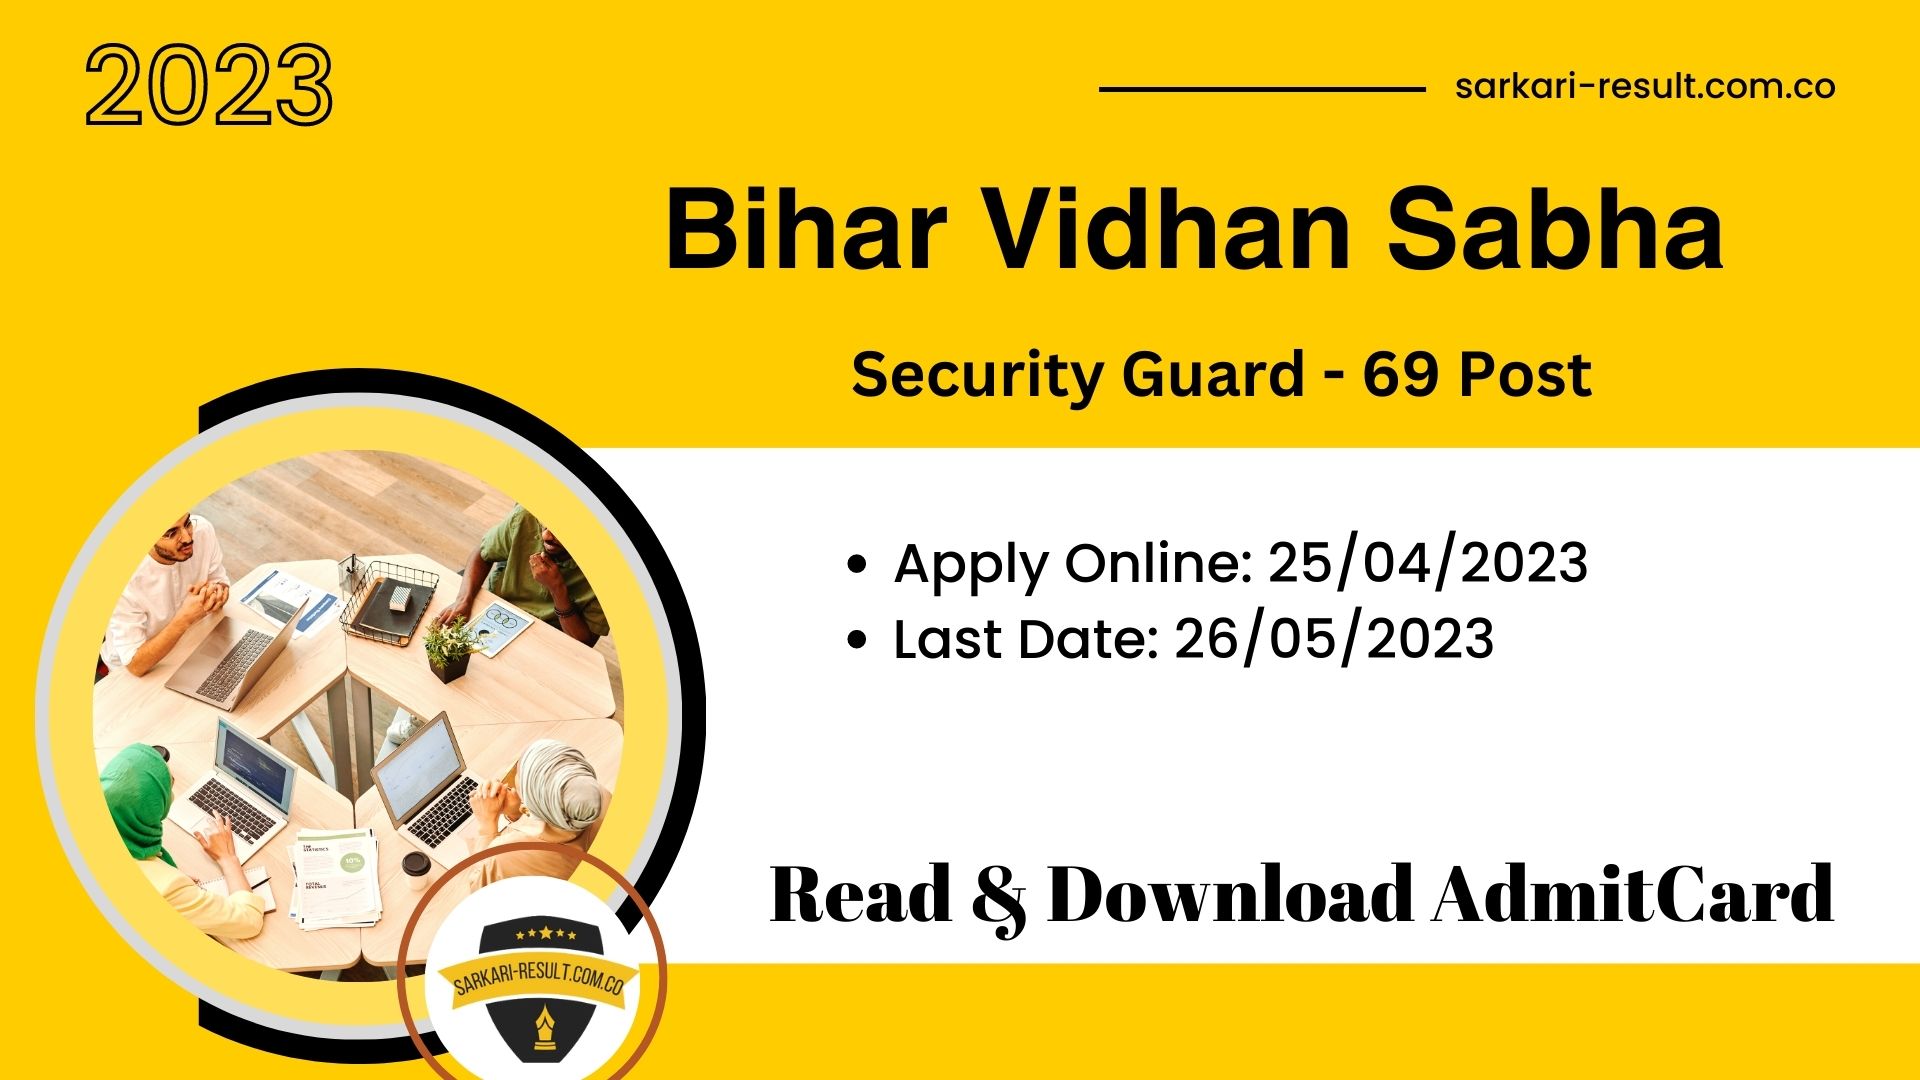 Bihar Vidhan Sabha Sachivalaya Security Guard Recruitment 2023 Exam Admit Card for 69 Post